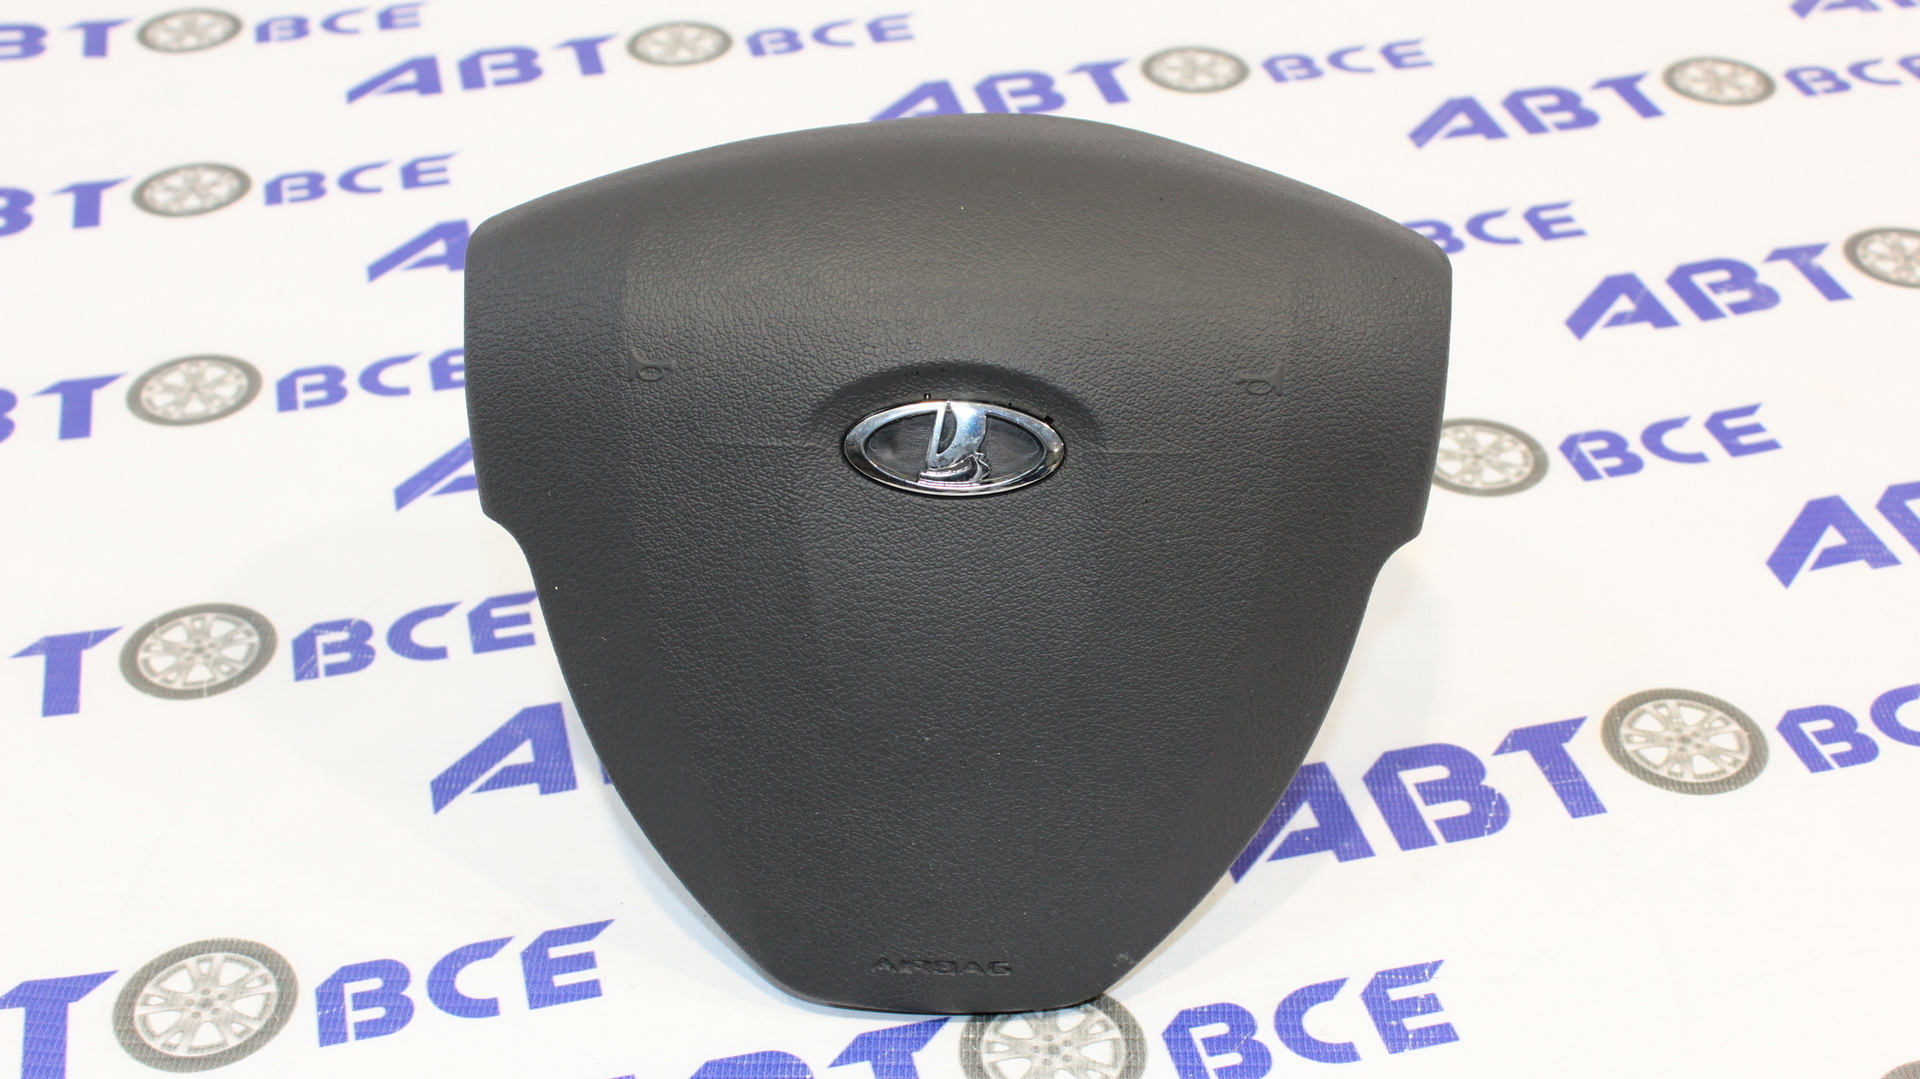 Крышка руля - кнопка сигнала - заглушка муляж Airbag (в руль) ВАЗ-21704 FL  Сызрань